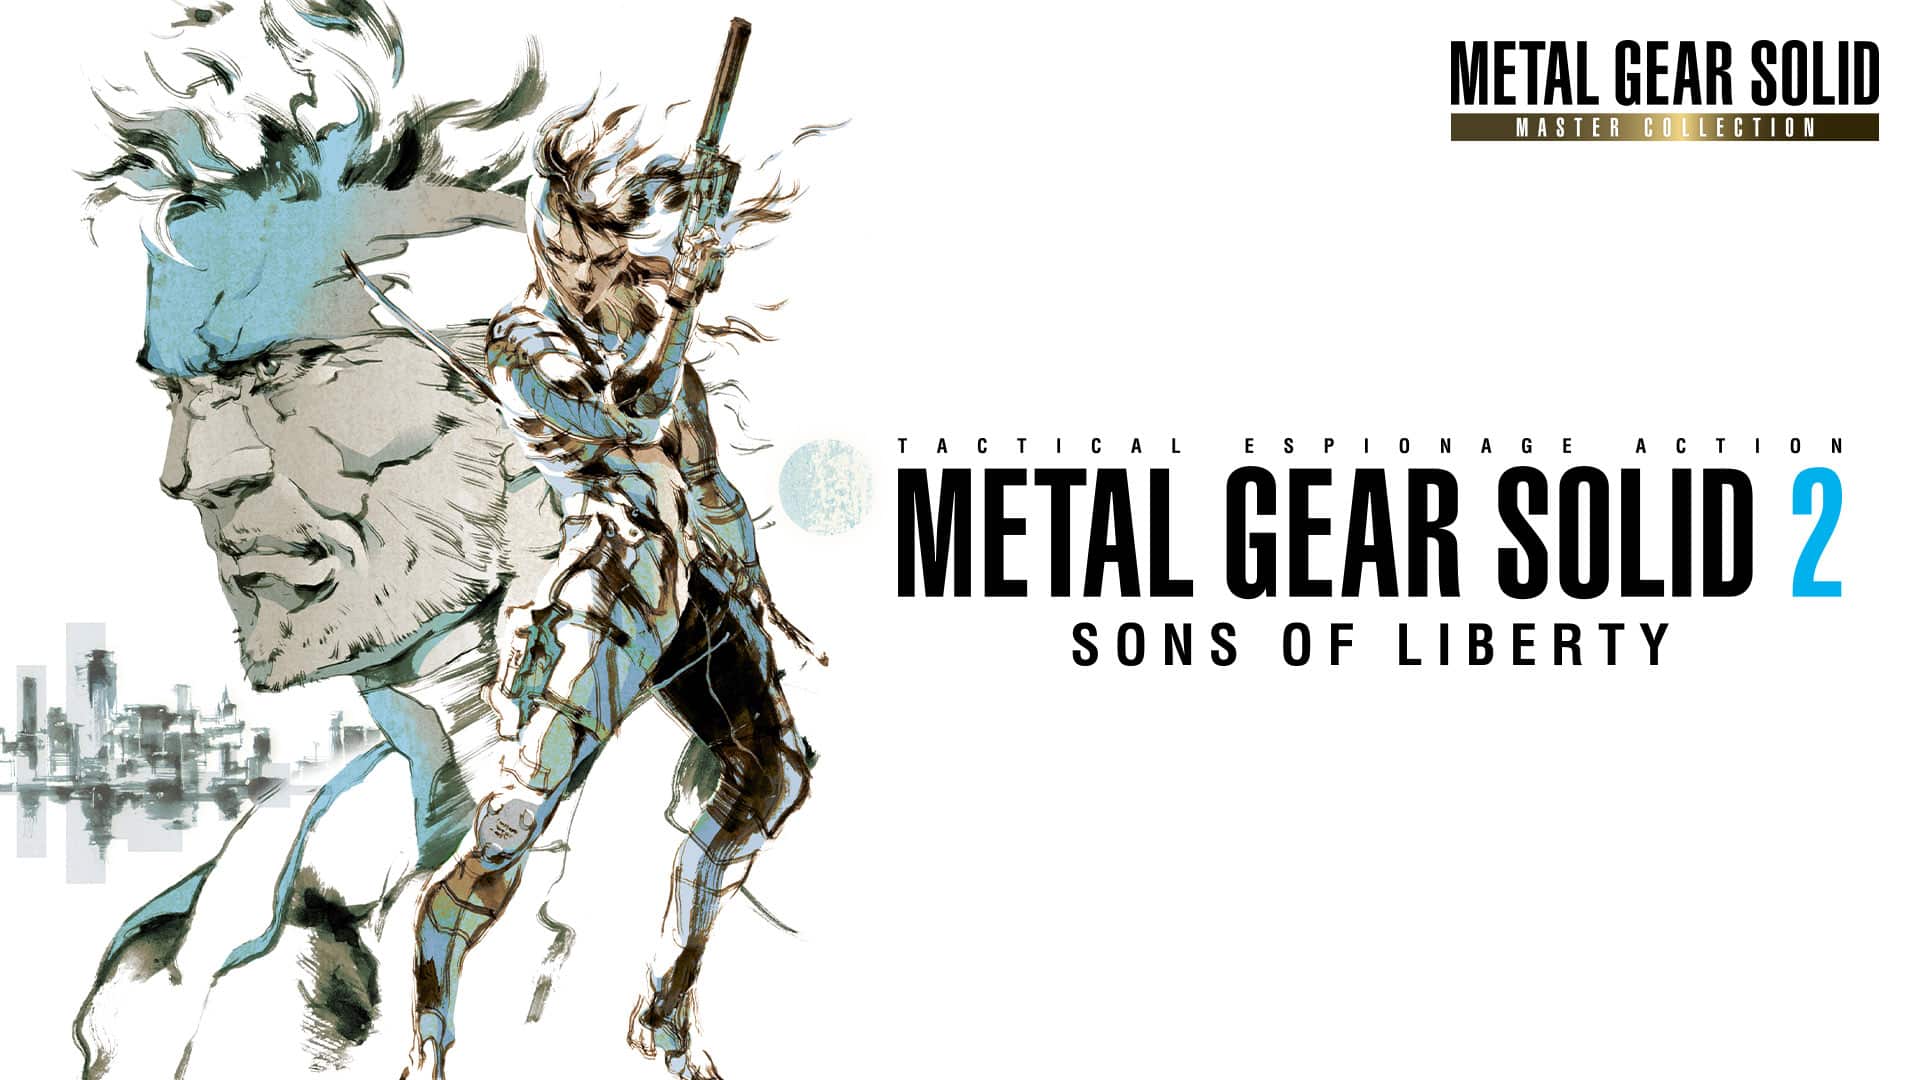 Metal Gear Solid 2 Update 1.31